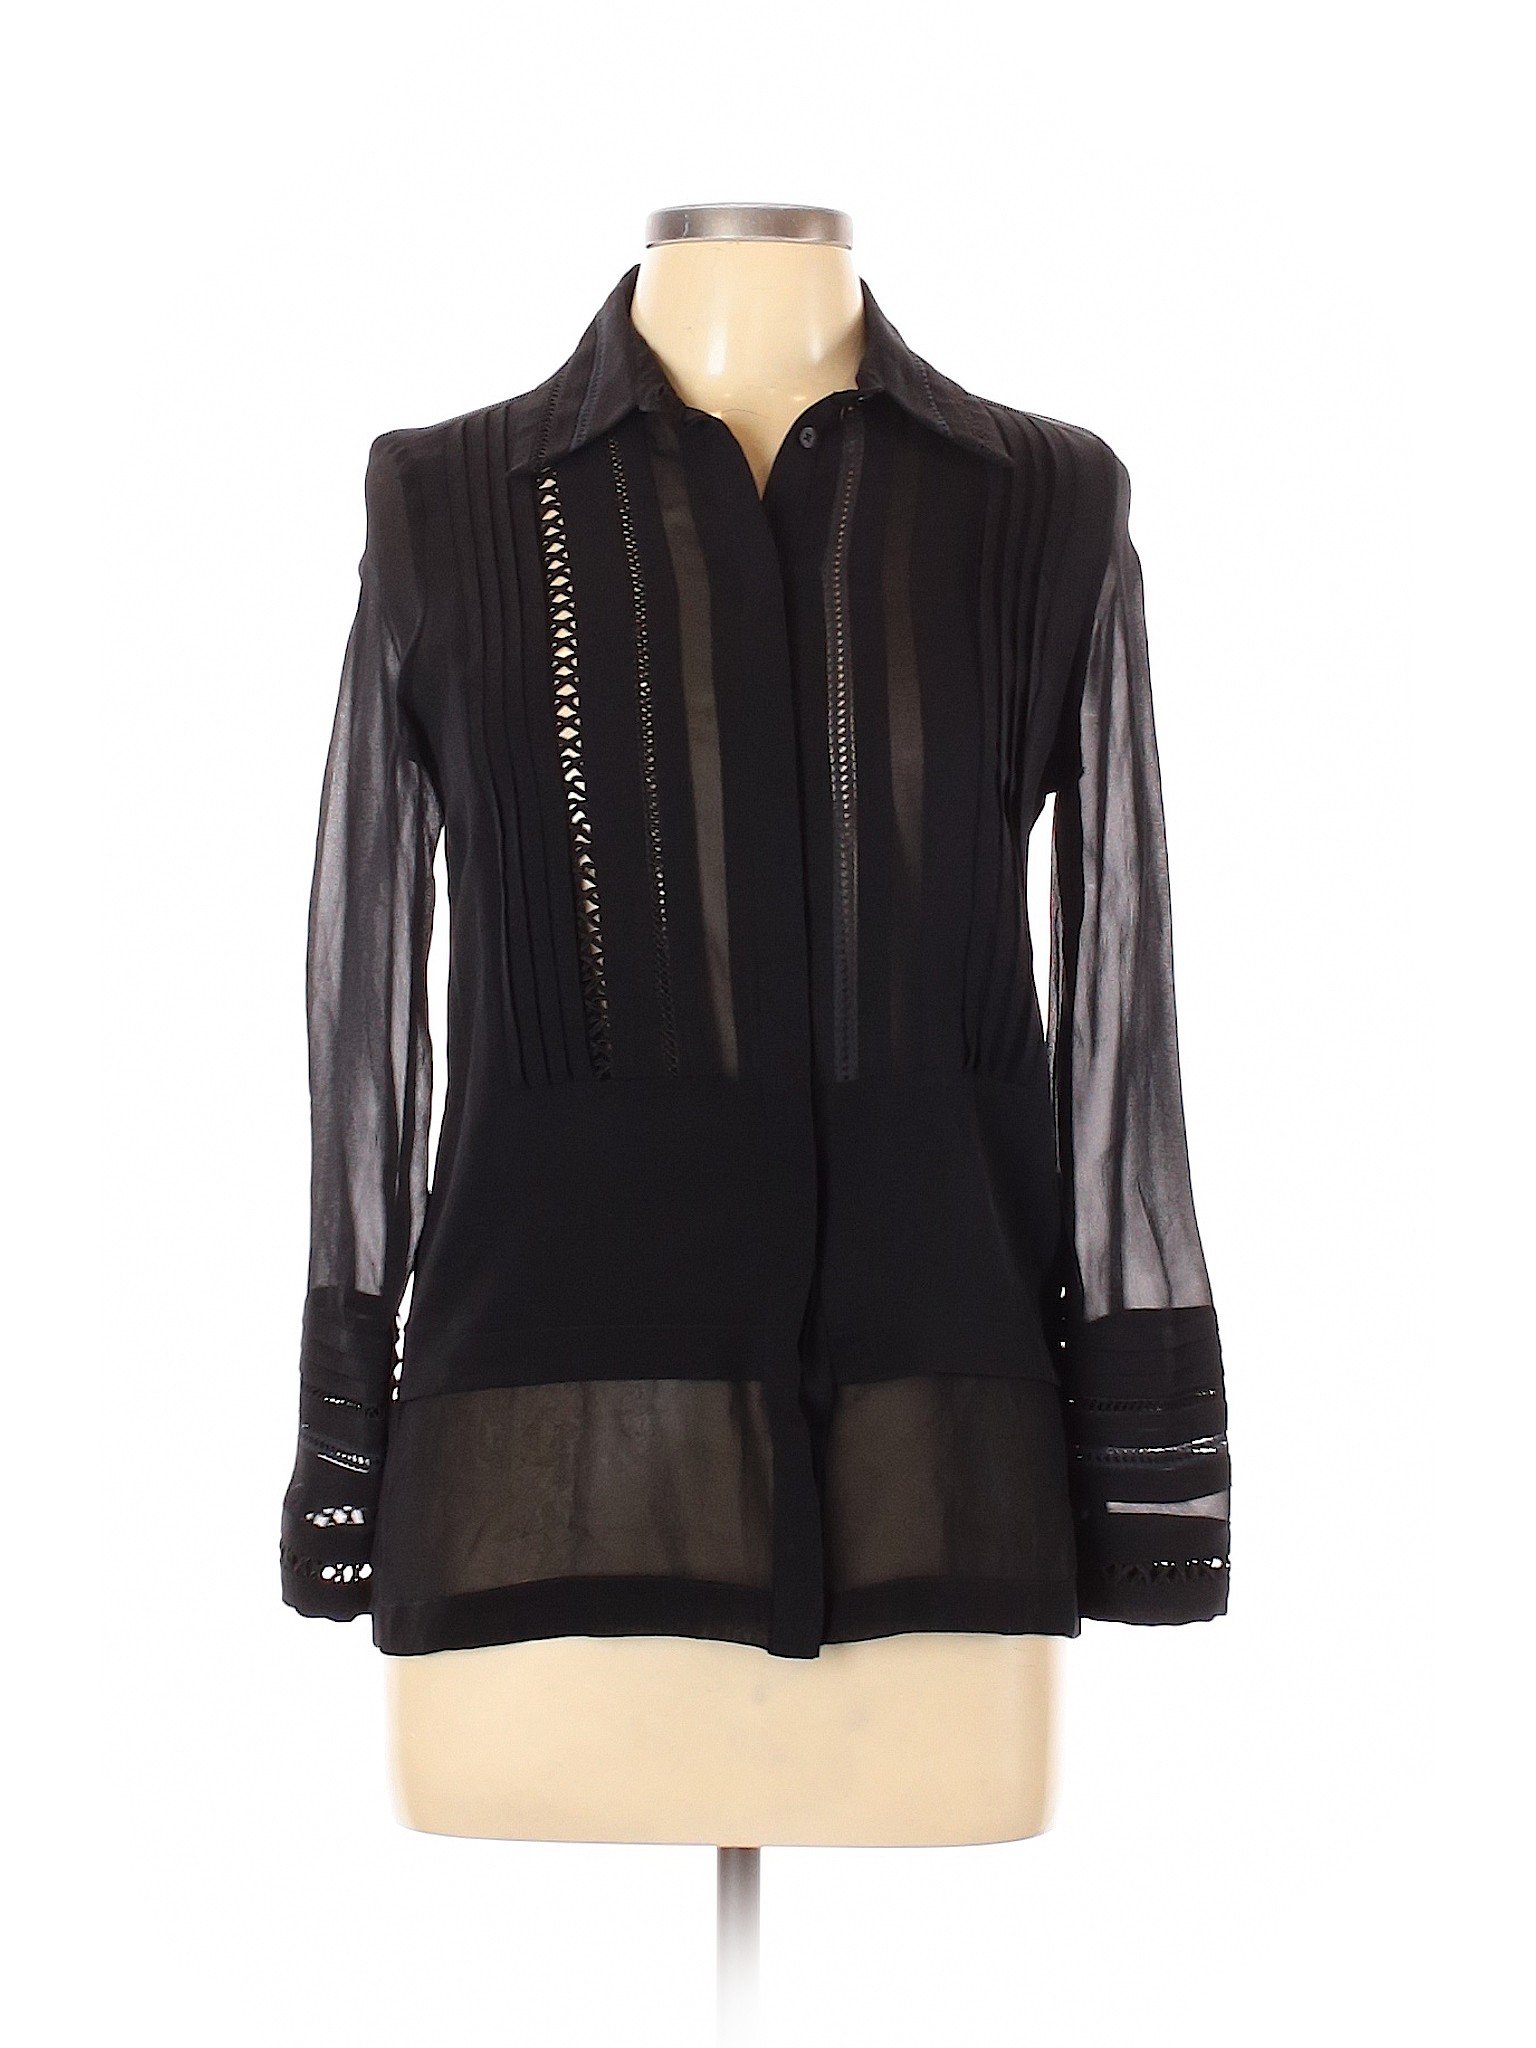 Yigal Azrouël New York 100% Silk Black Long Sleeve Silk Top Size XL (4 ...